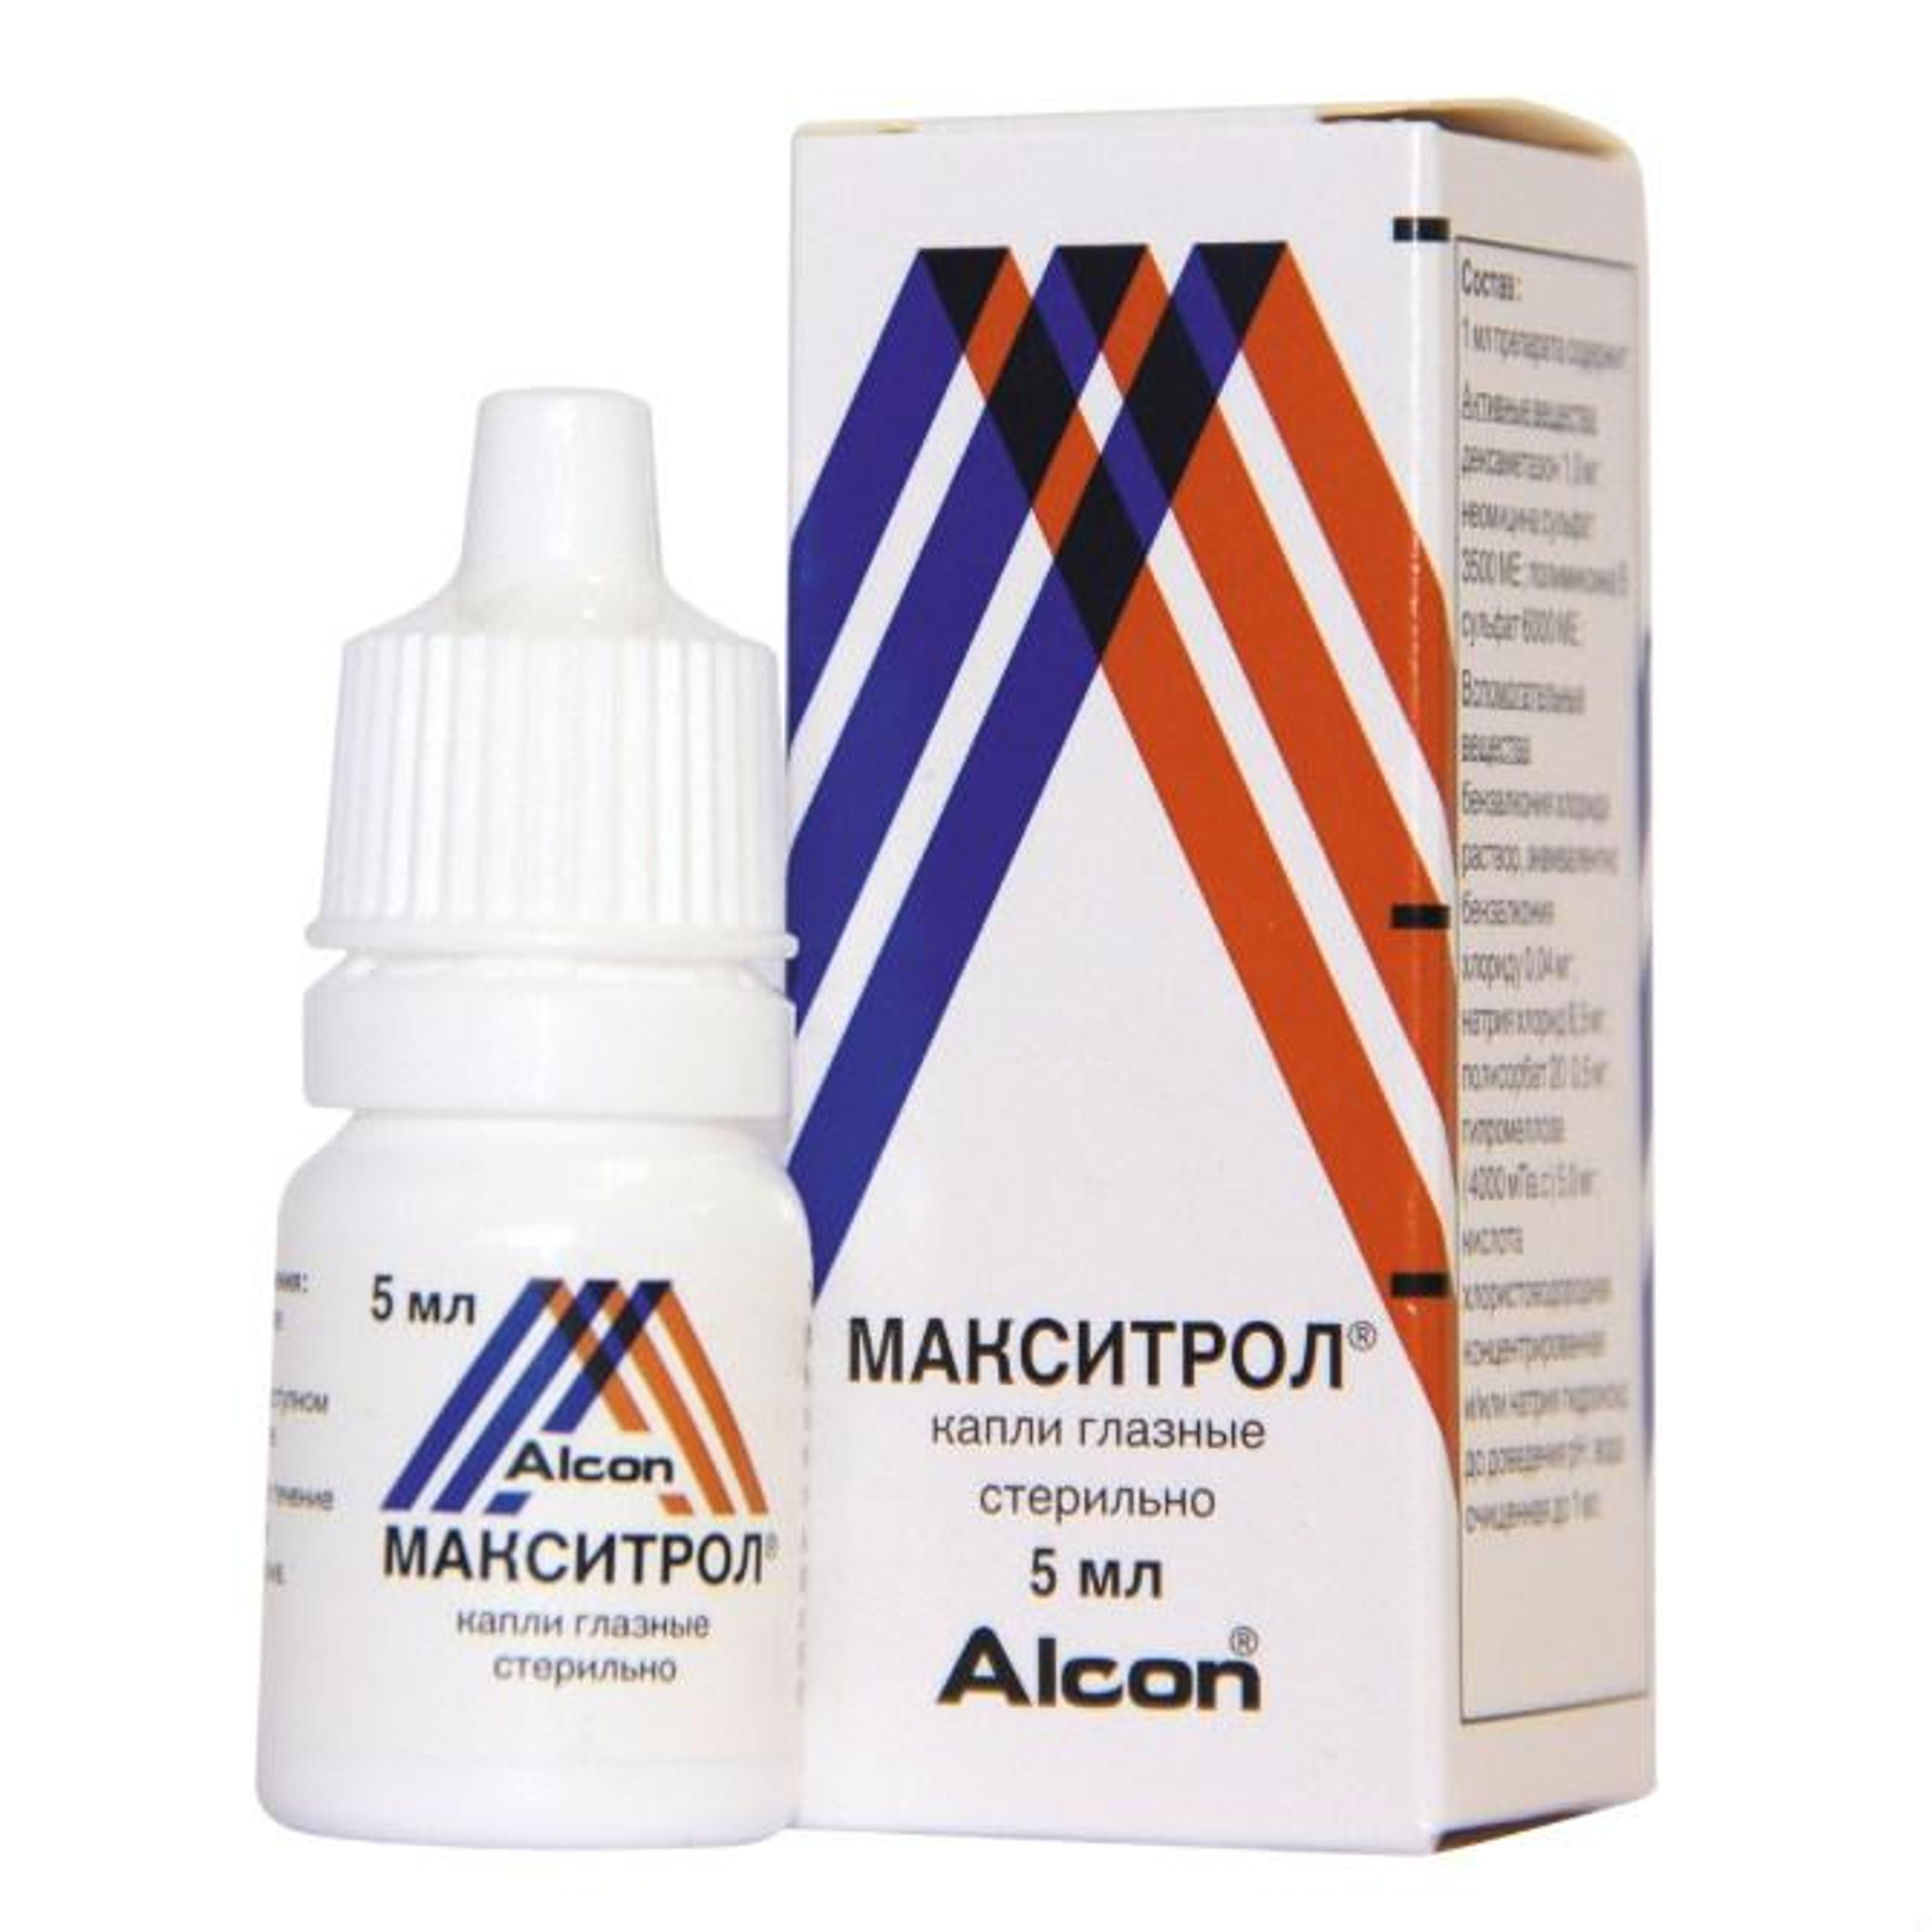 maxitrol 5ml alcon